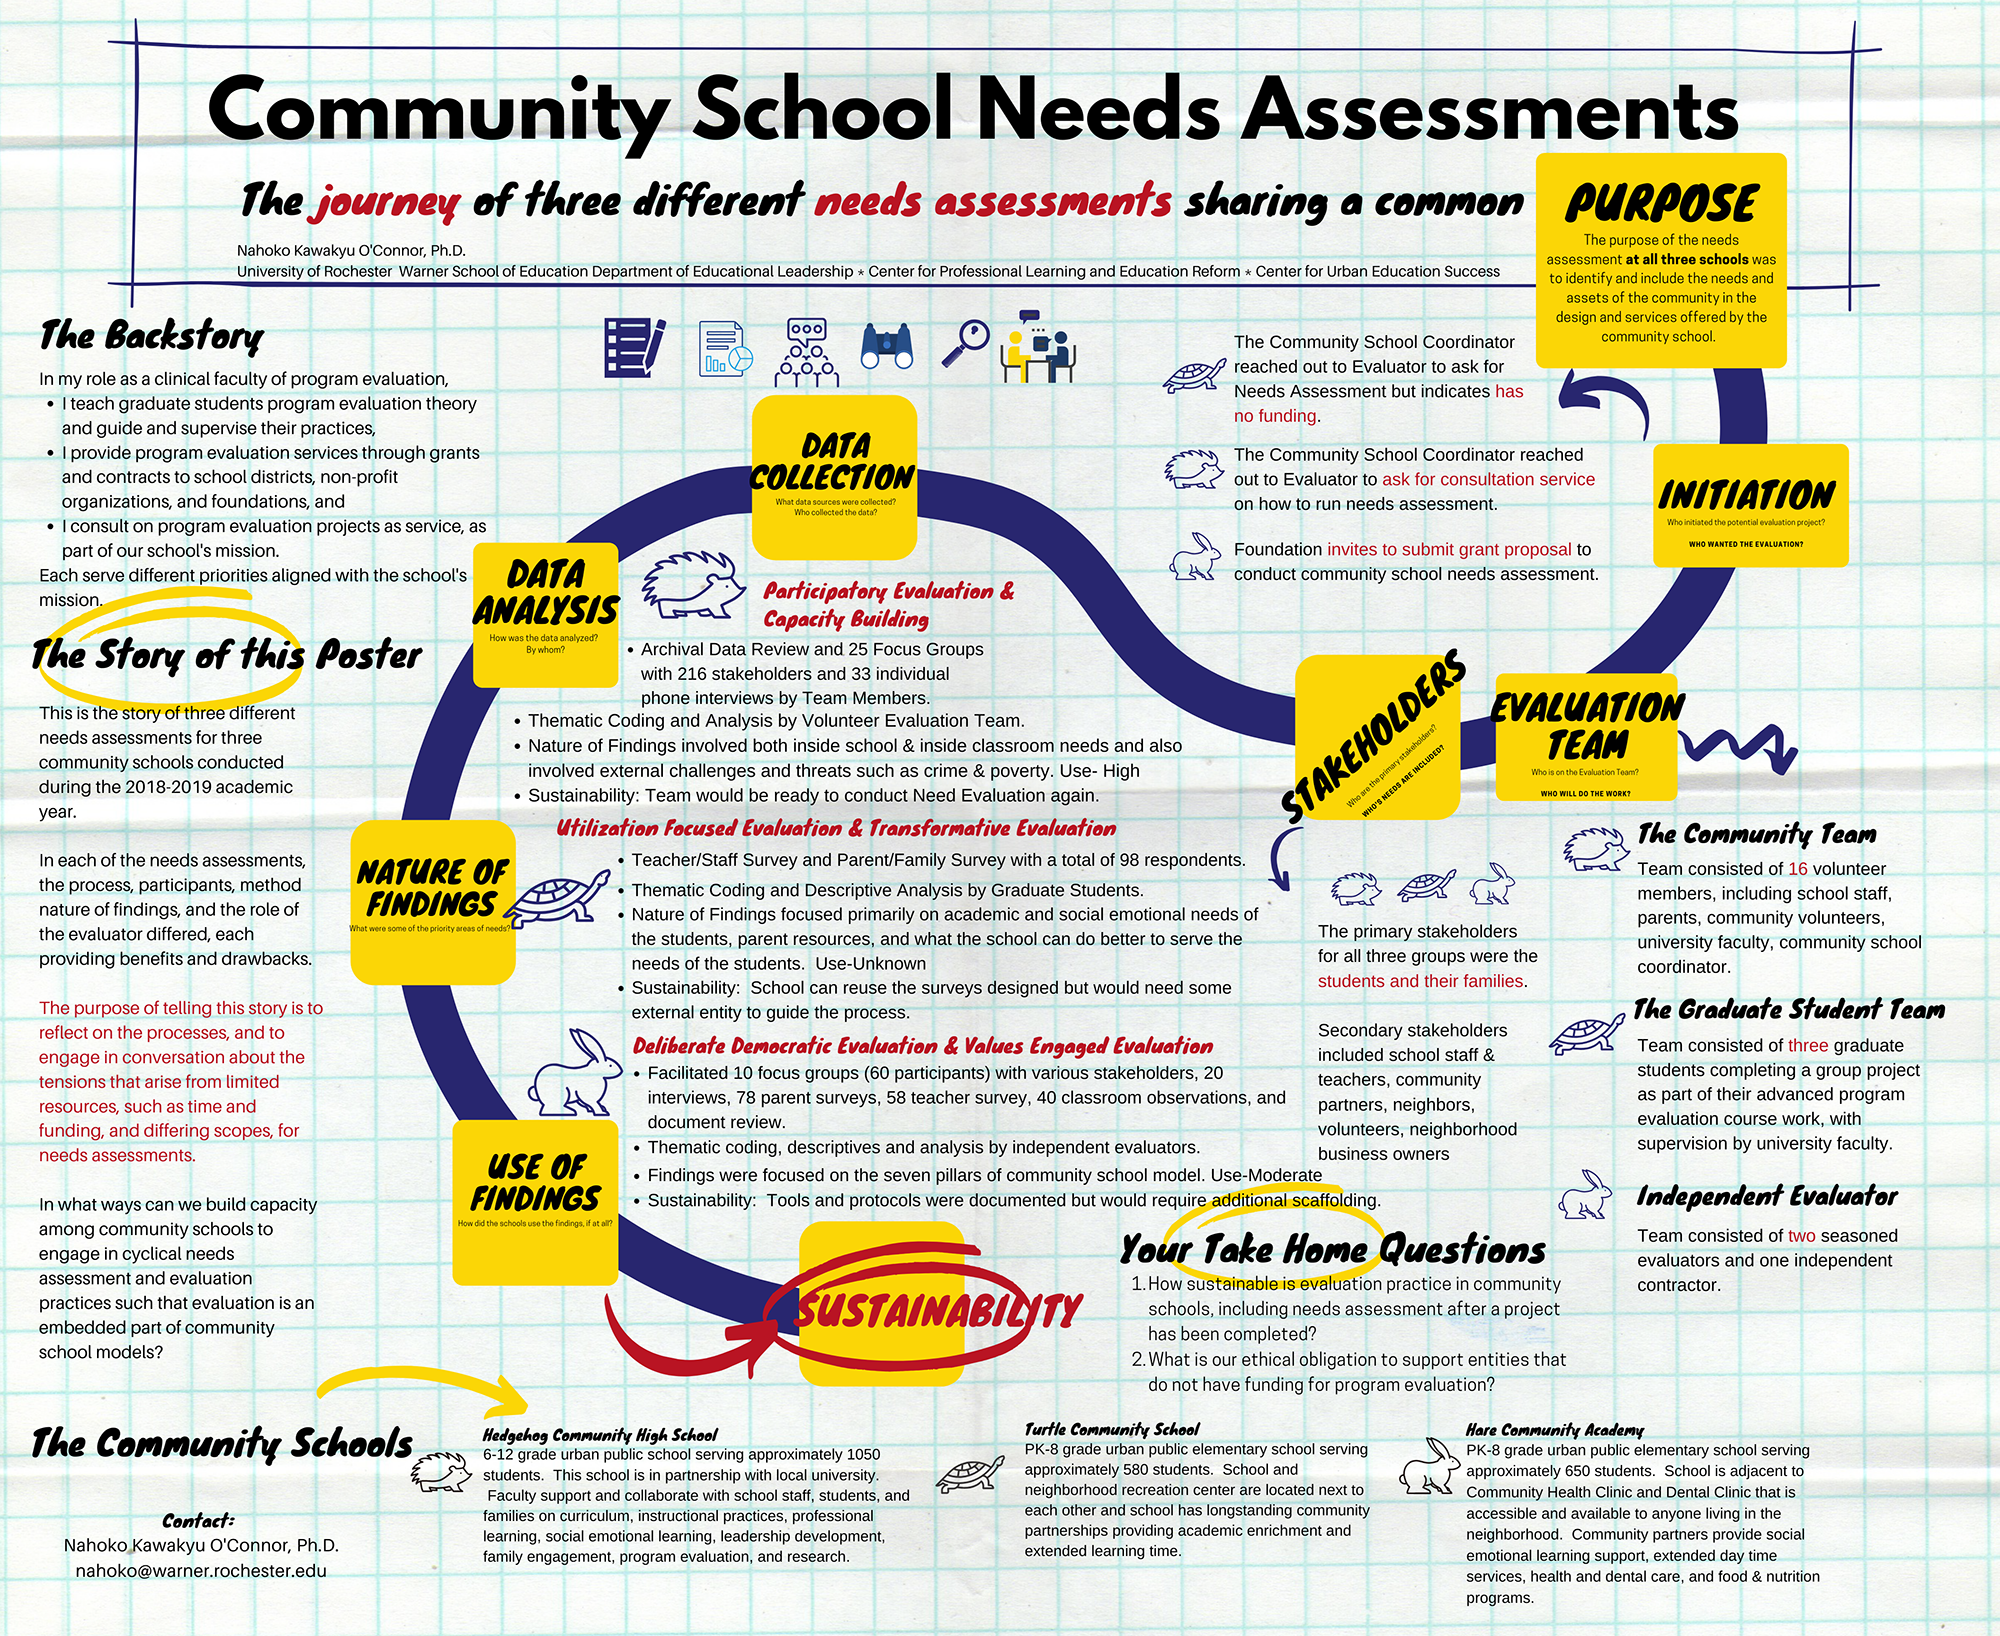 https://www.rochester.edu/warner/center/wp-content/uploads/2020/10/AEA2019-Community-School-Needs-Assessment-Poster.png